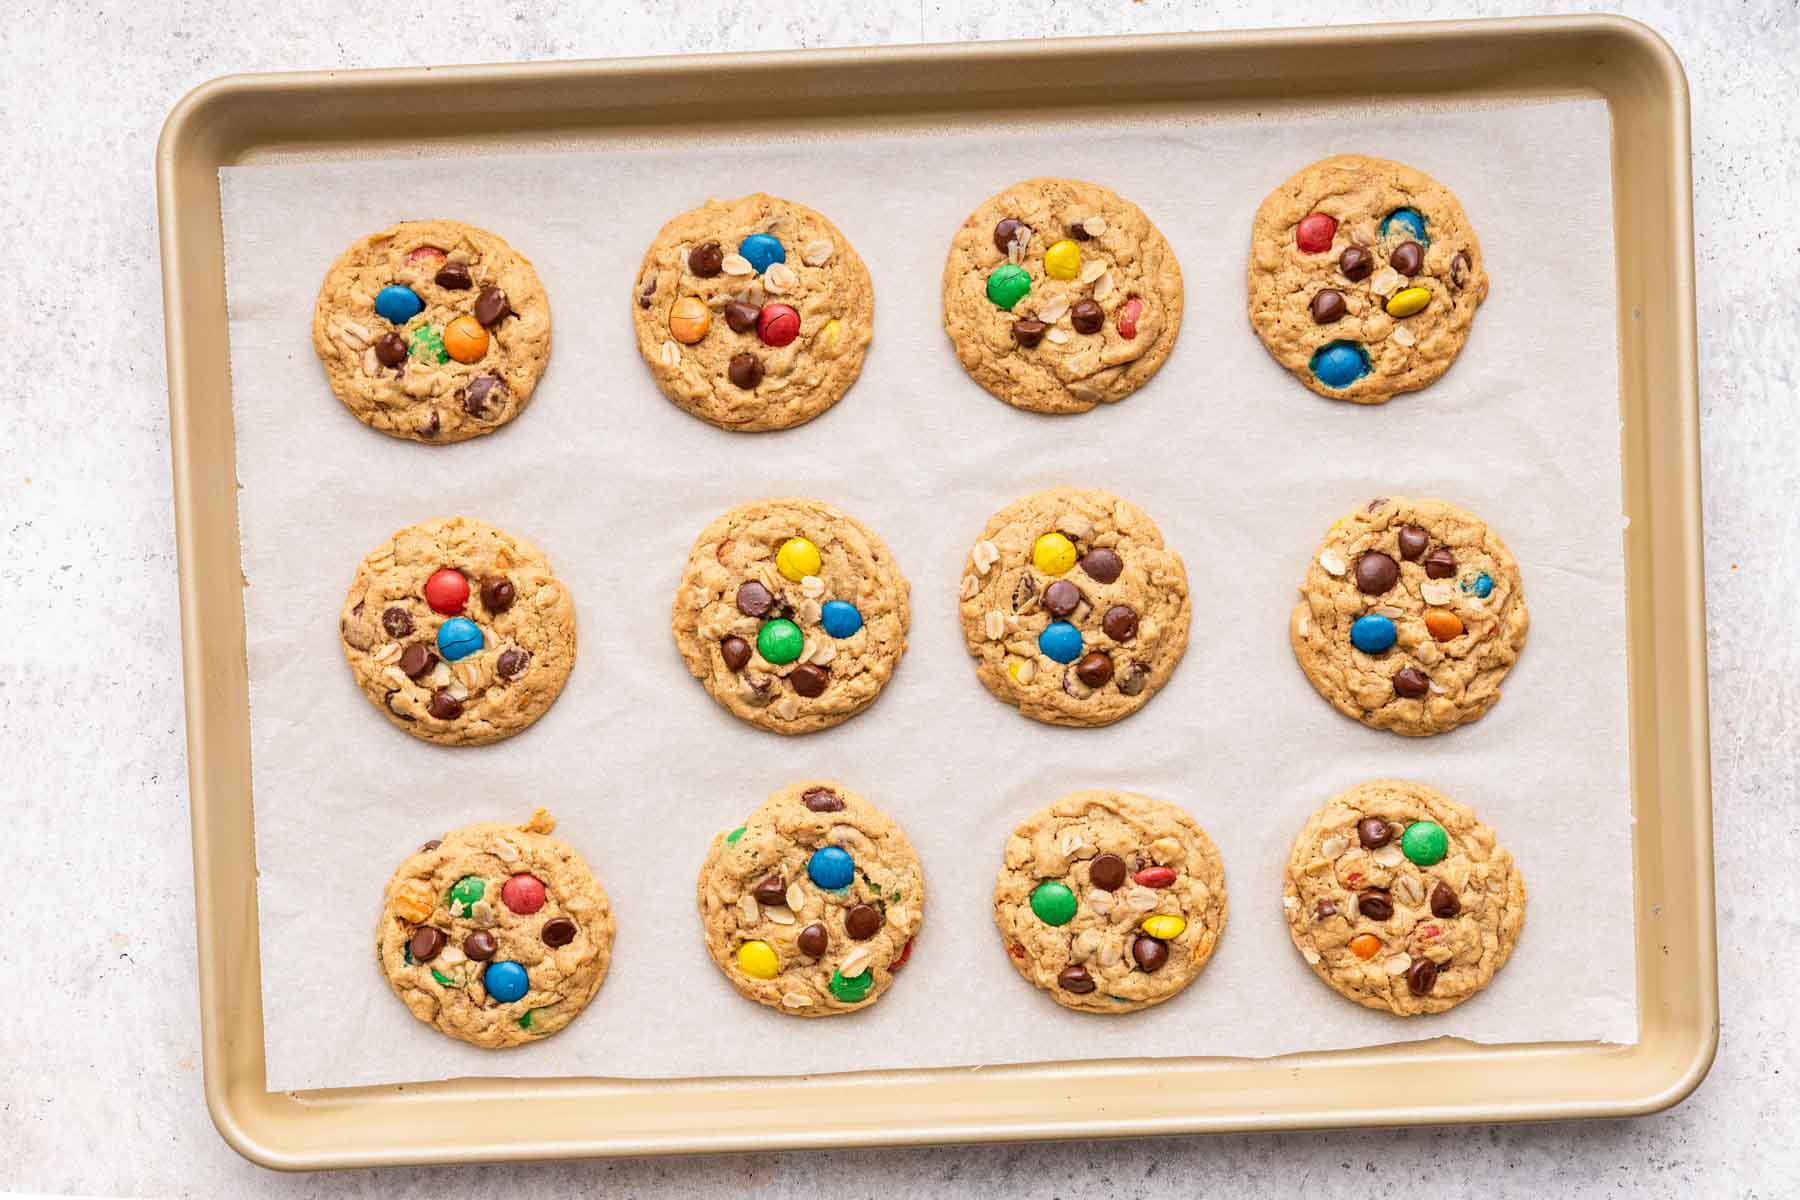 Twelve monster cookies baked on a gold sheet pan.